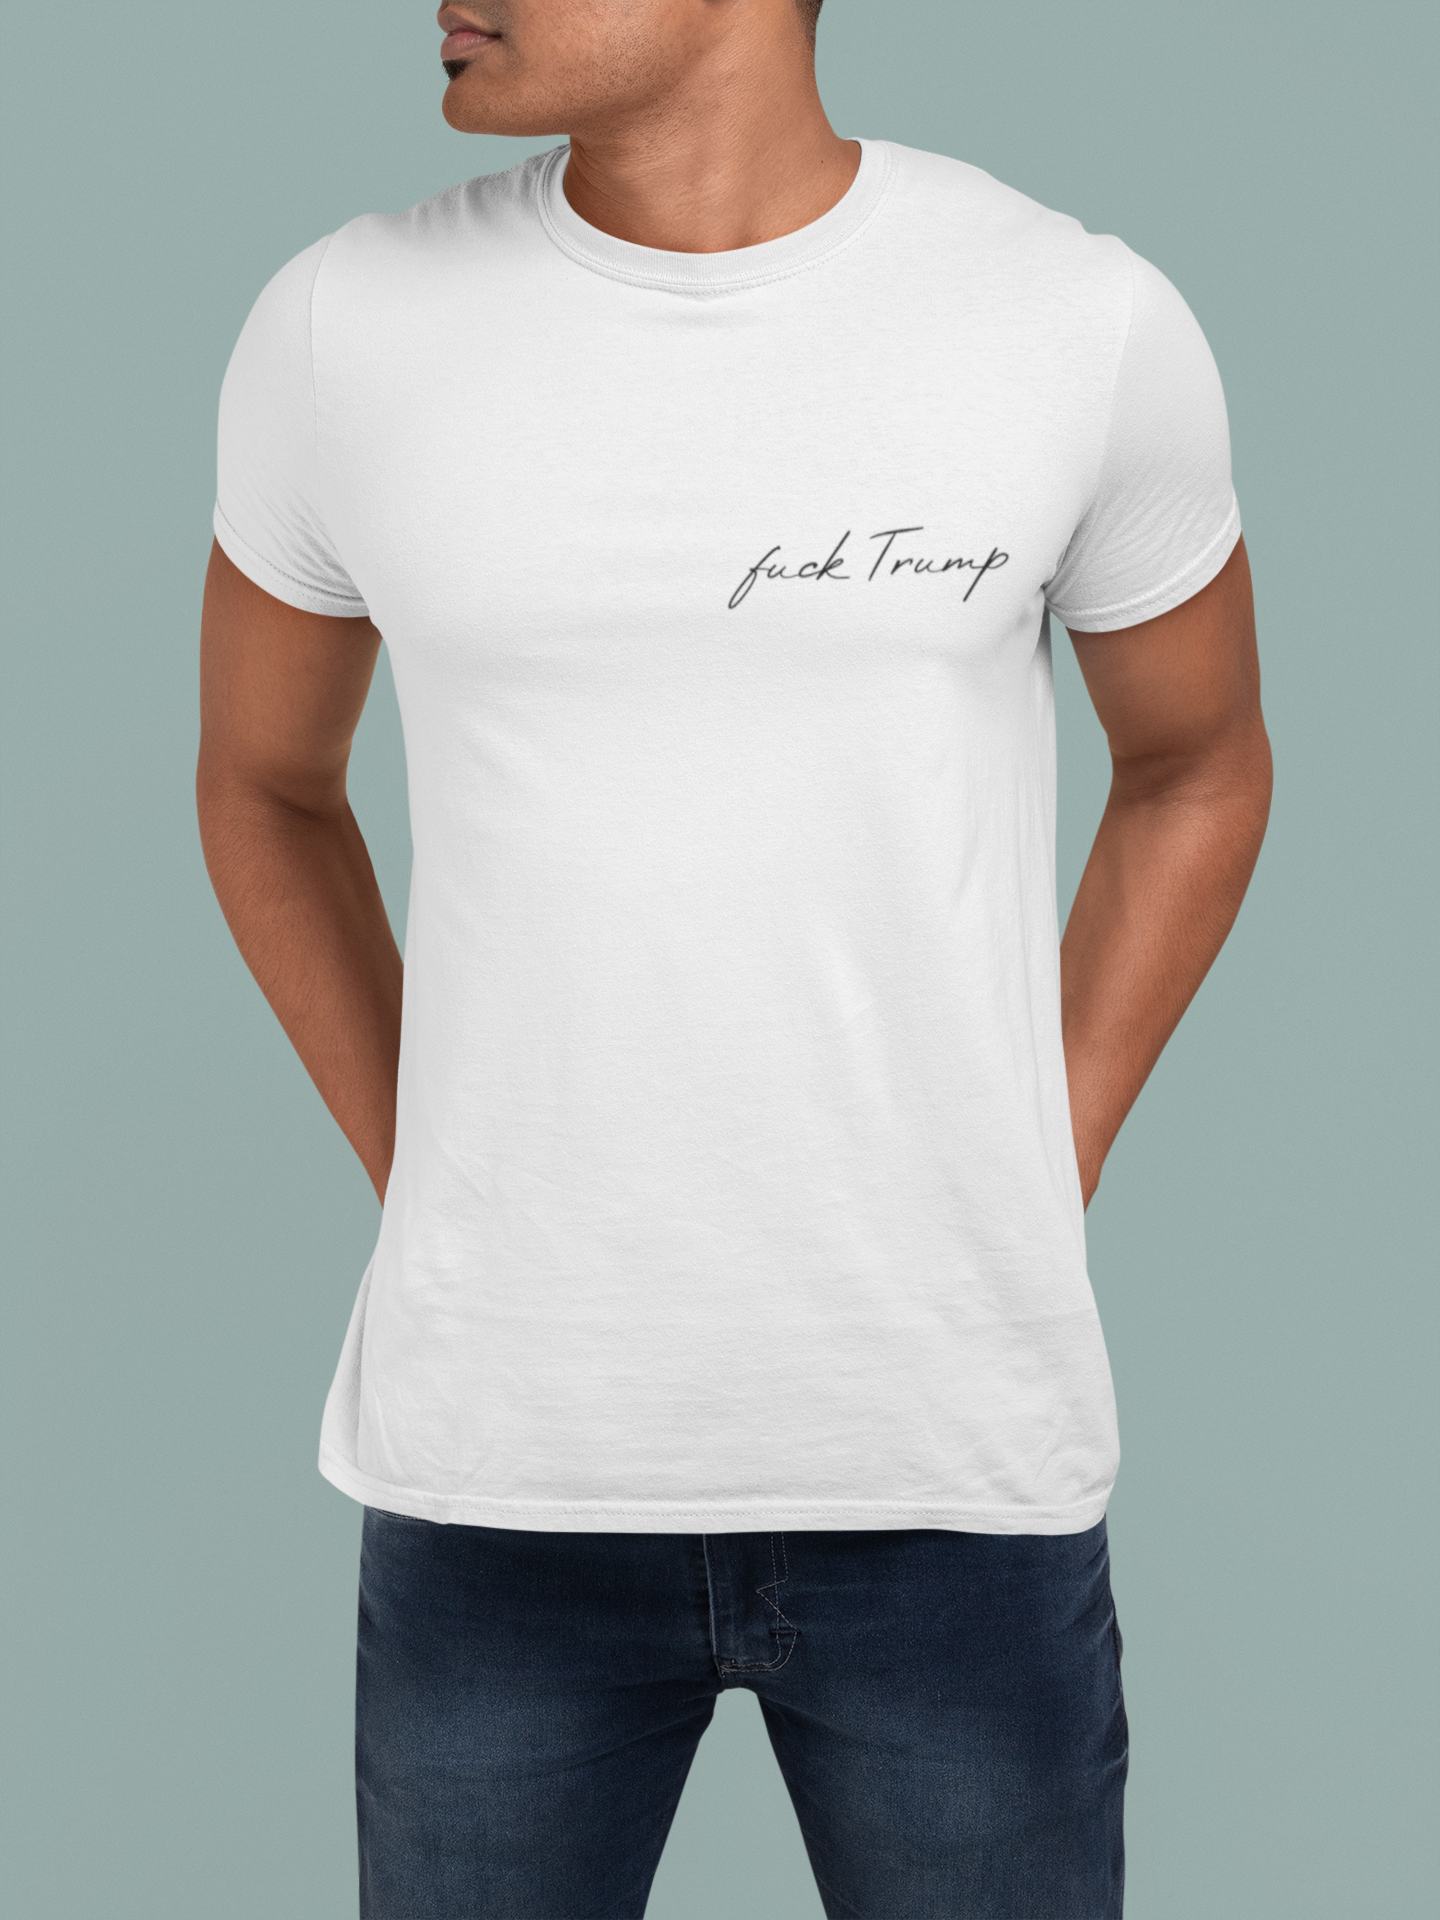 fuck trump tshirt